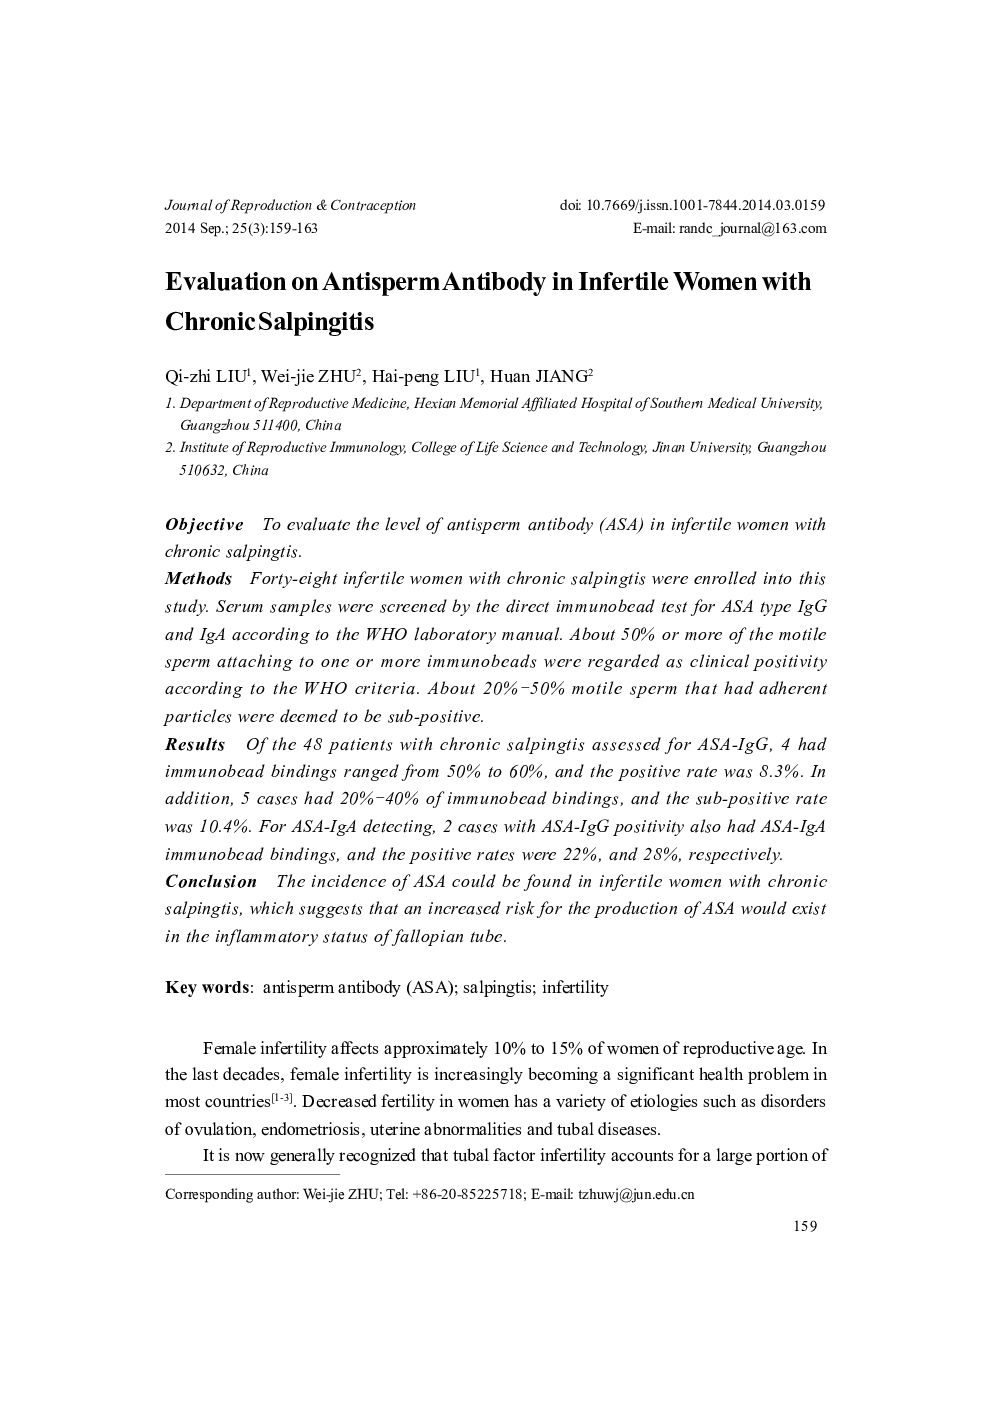 Evaluation on Antisperm Antibody in Infertile Women with Chronic Salpingitis